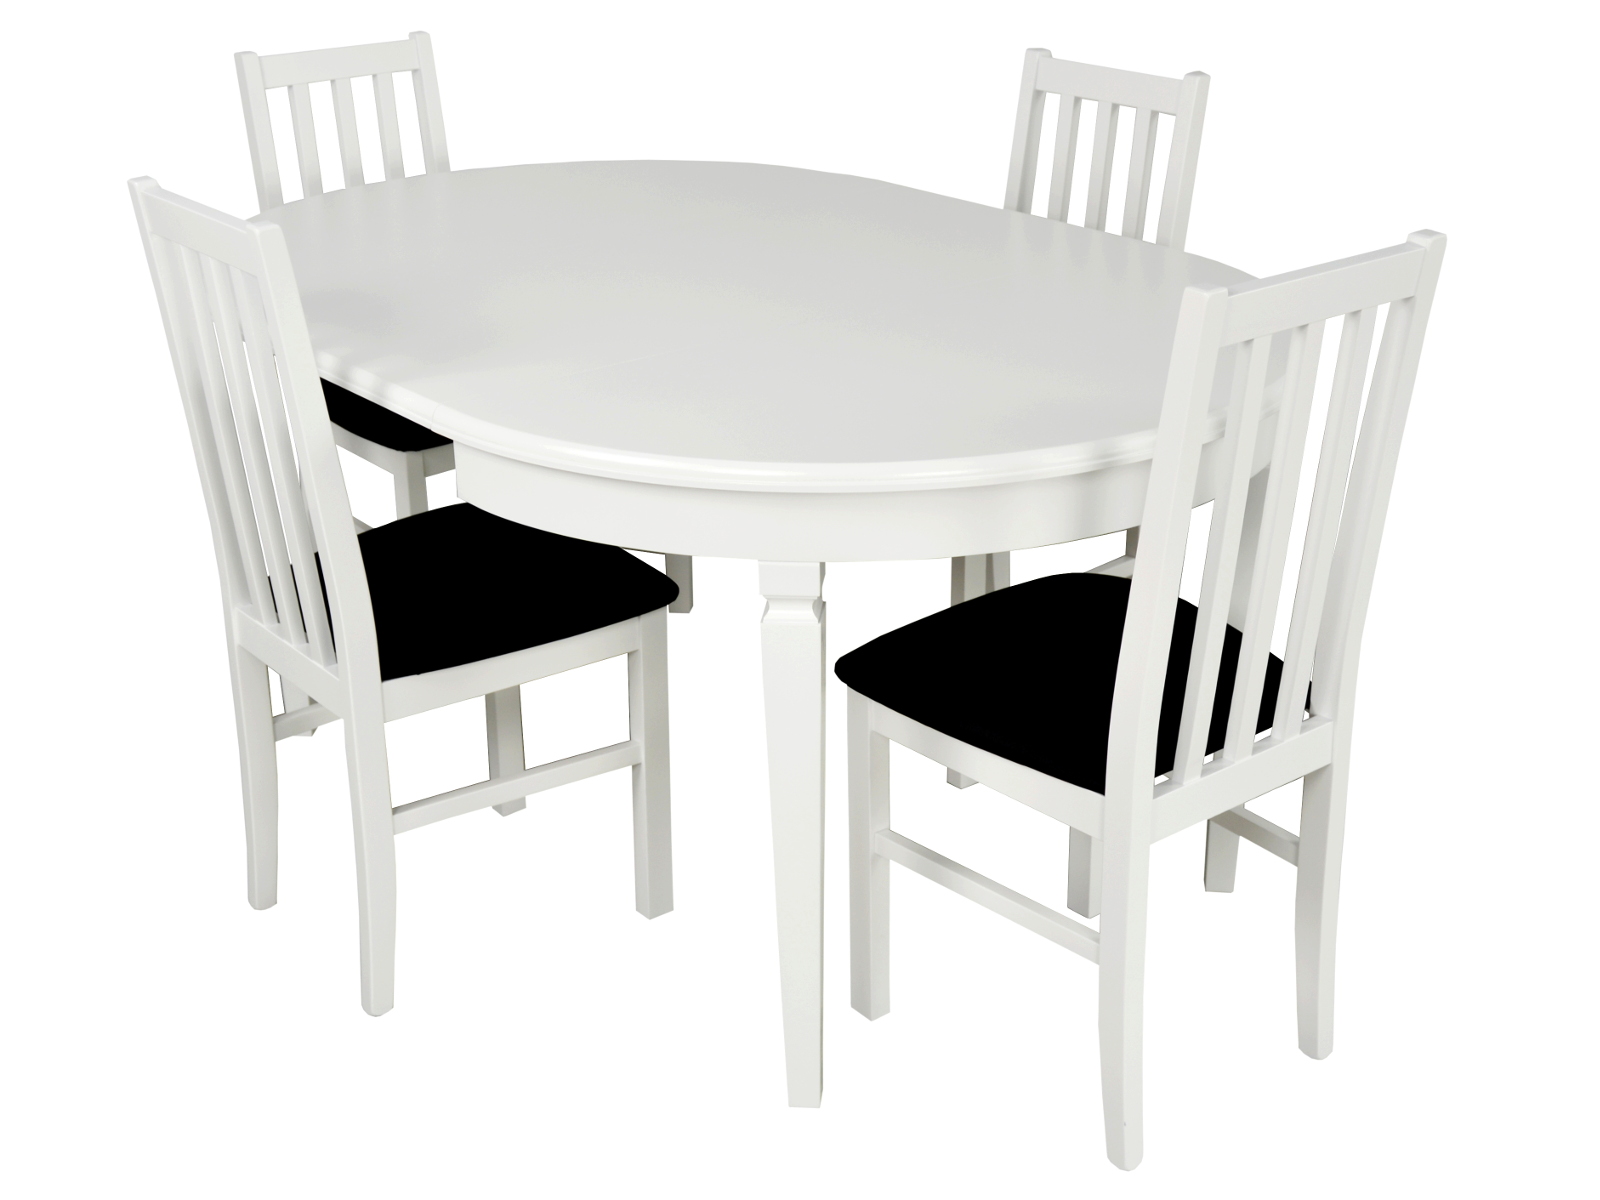 Икеа стол кухонный белый. Стол круглый икеа белый раздвижной. Стол круглый белый икеа раскладной. Стол икеа белый кухонный раздвижной. Икеа стол кухонный белый овальный.